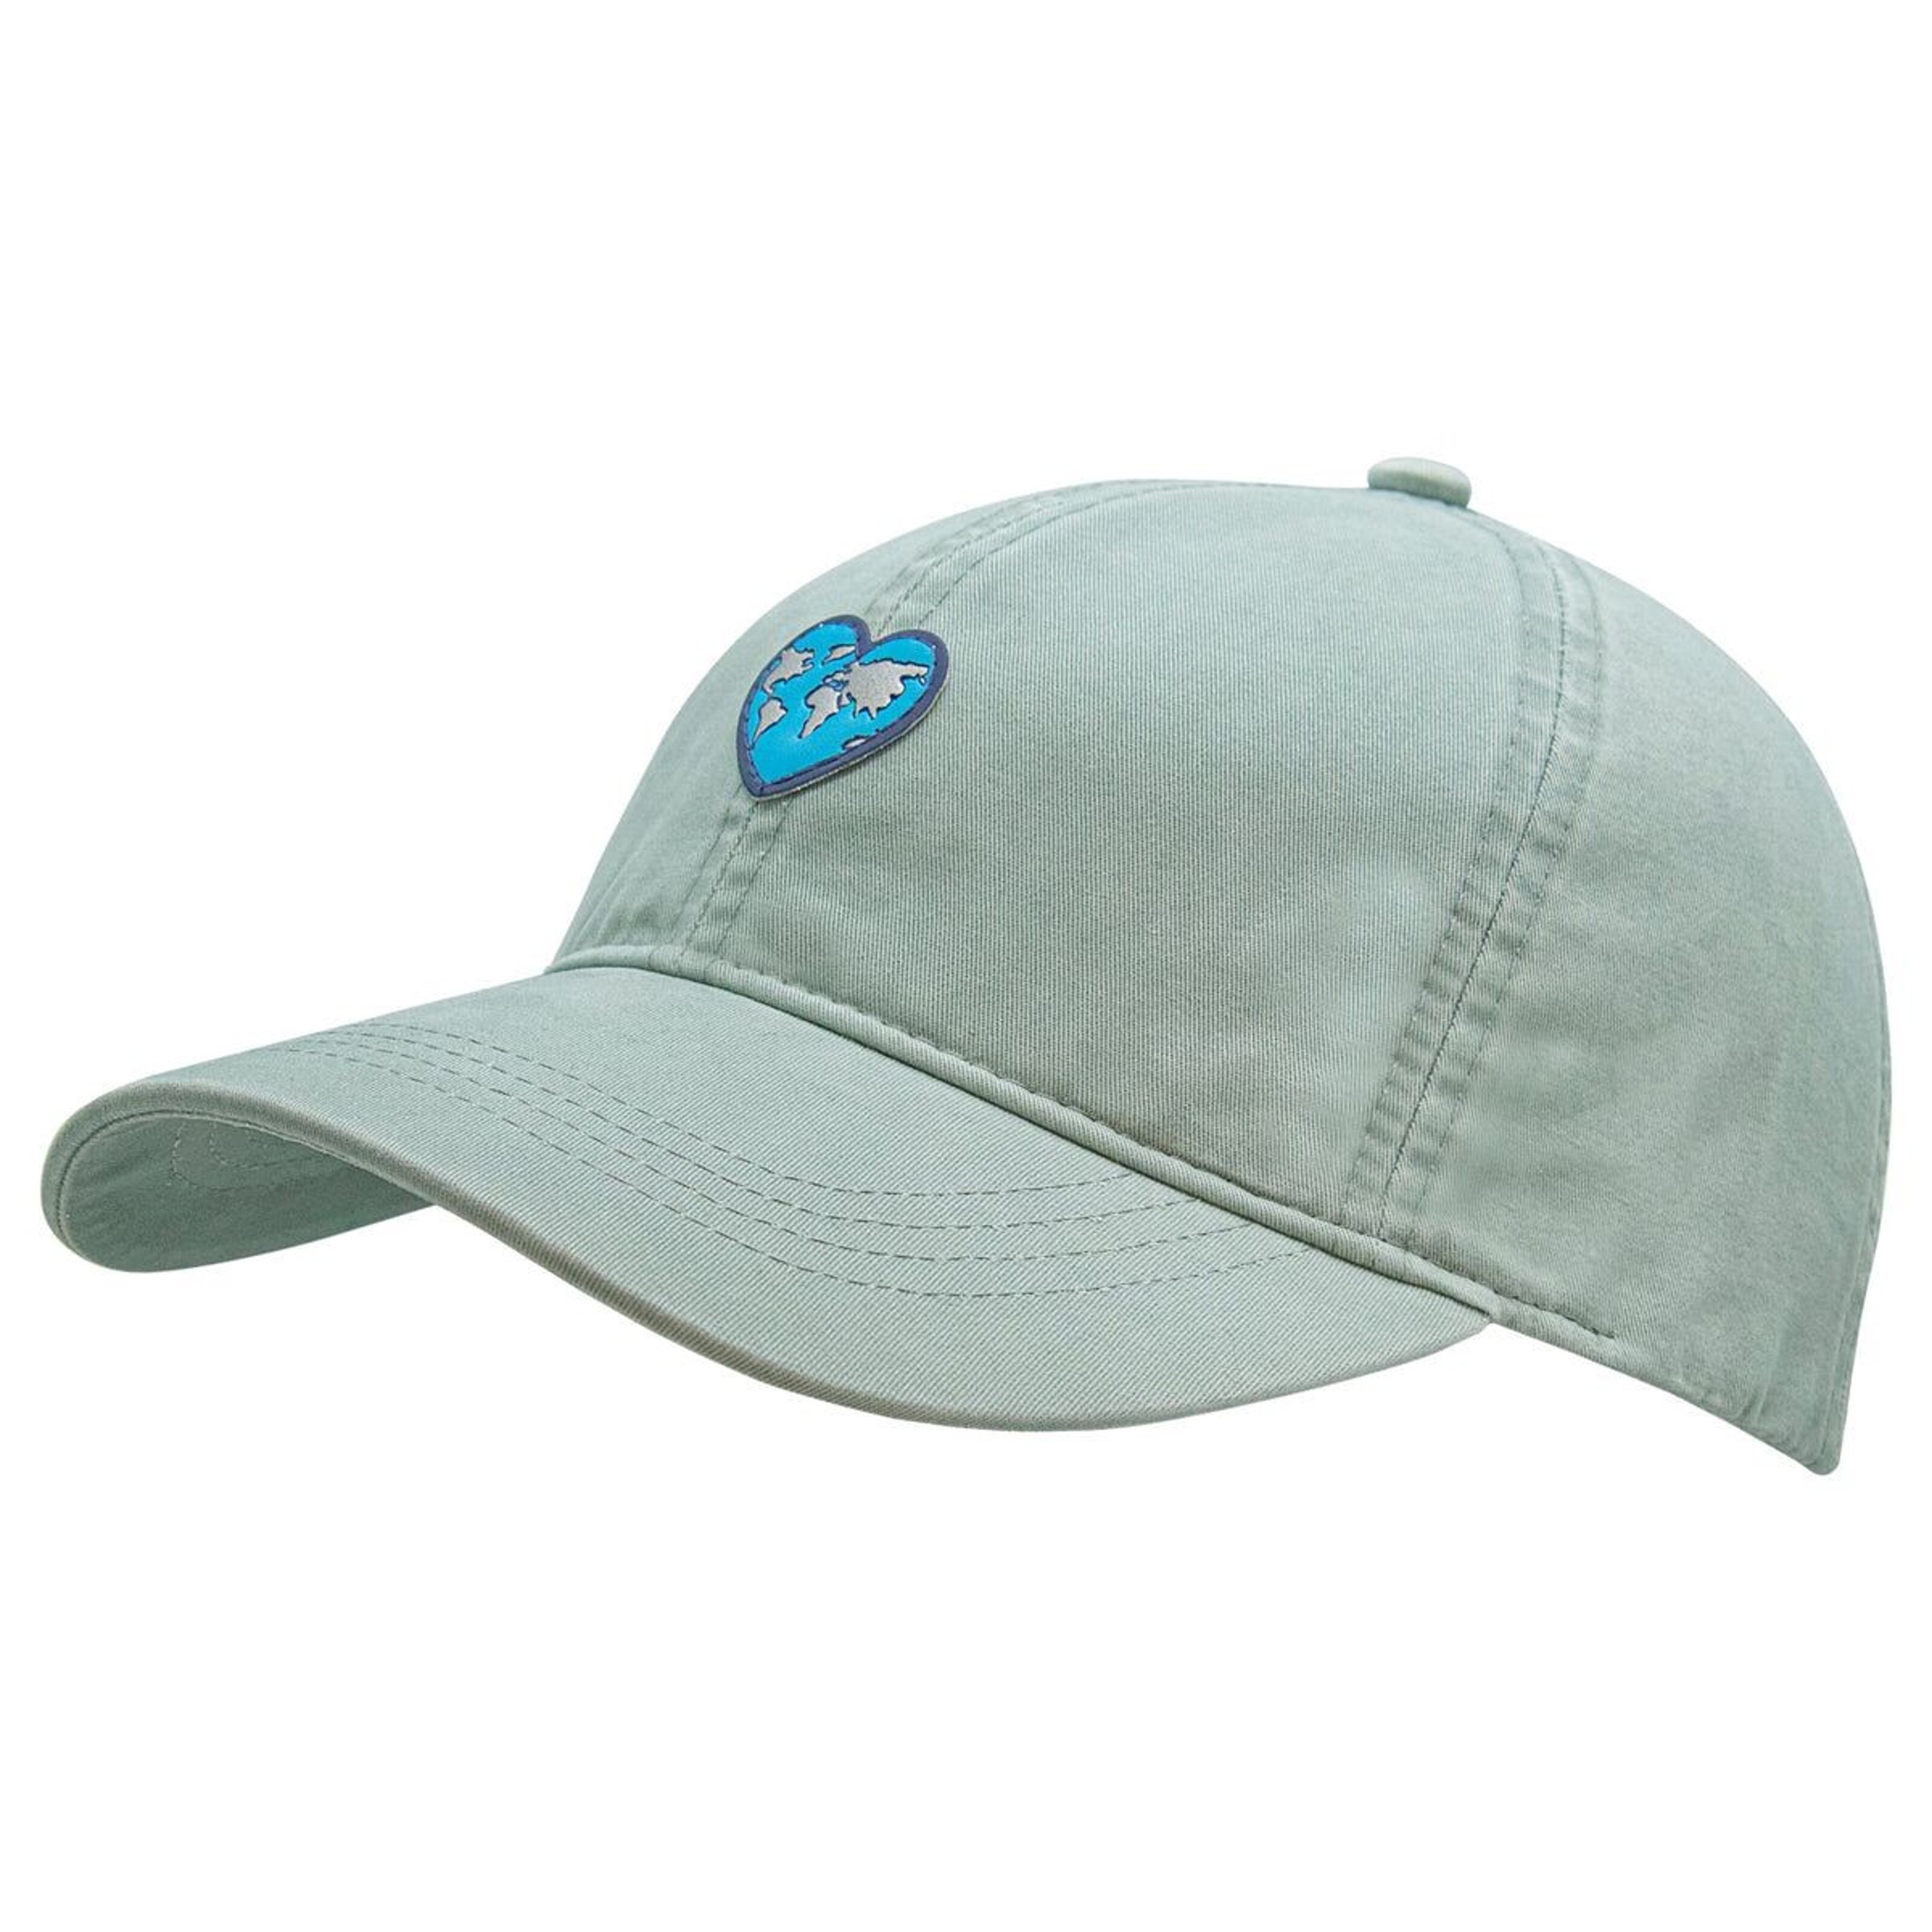 baseball cap wholesale Buy Hat Veracruz